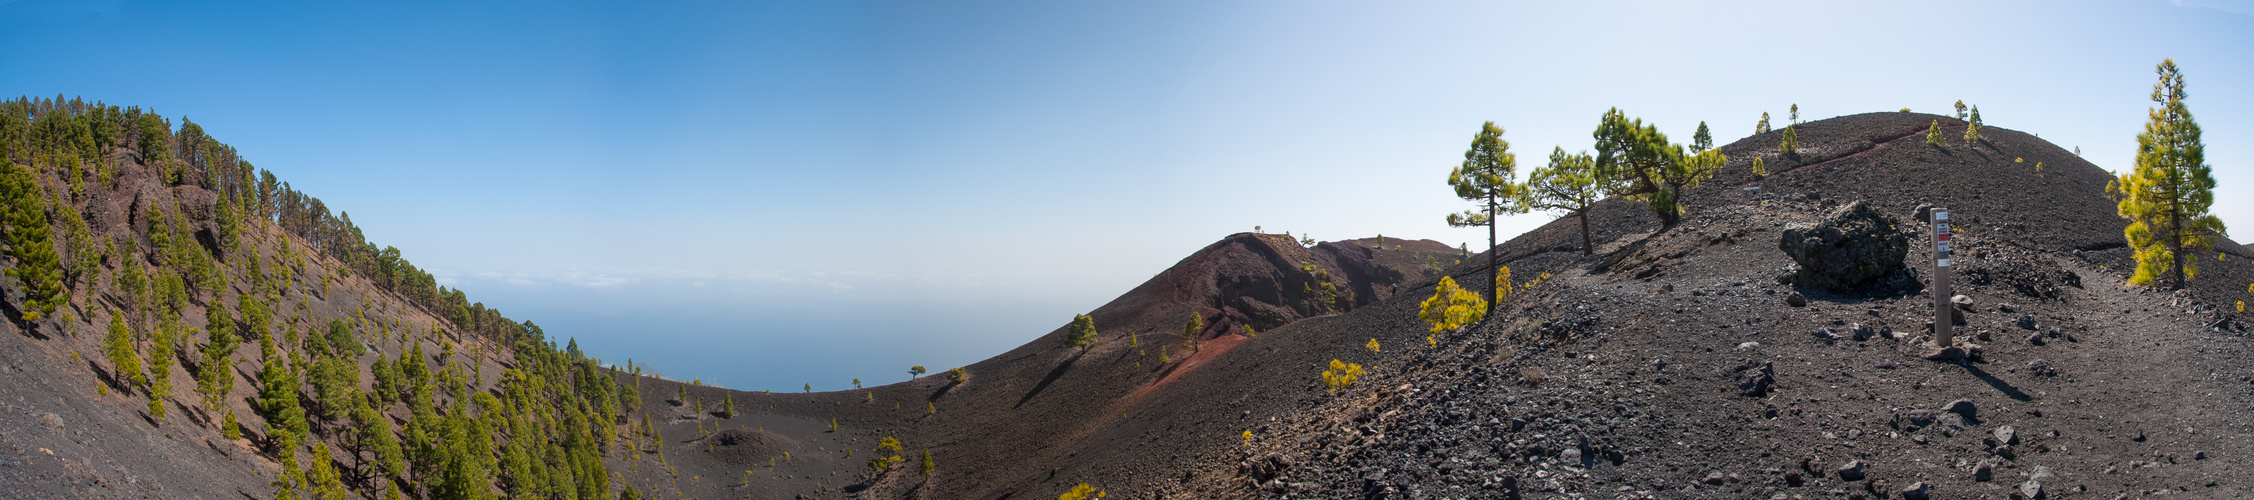 Achterbahn-Landschaft mit Blick aufs Meer und den Volcan de Martin (La Palma)